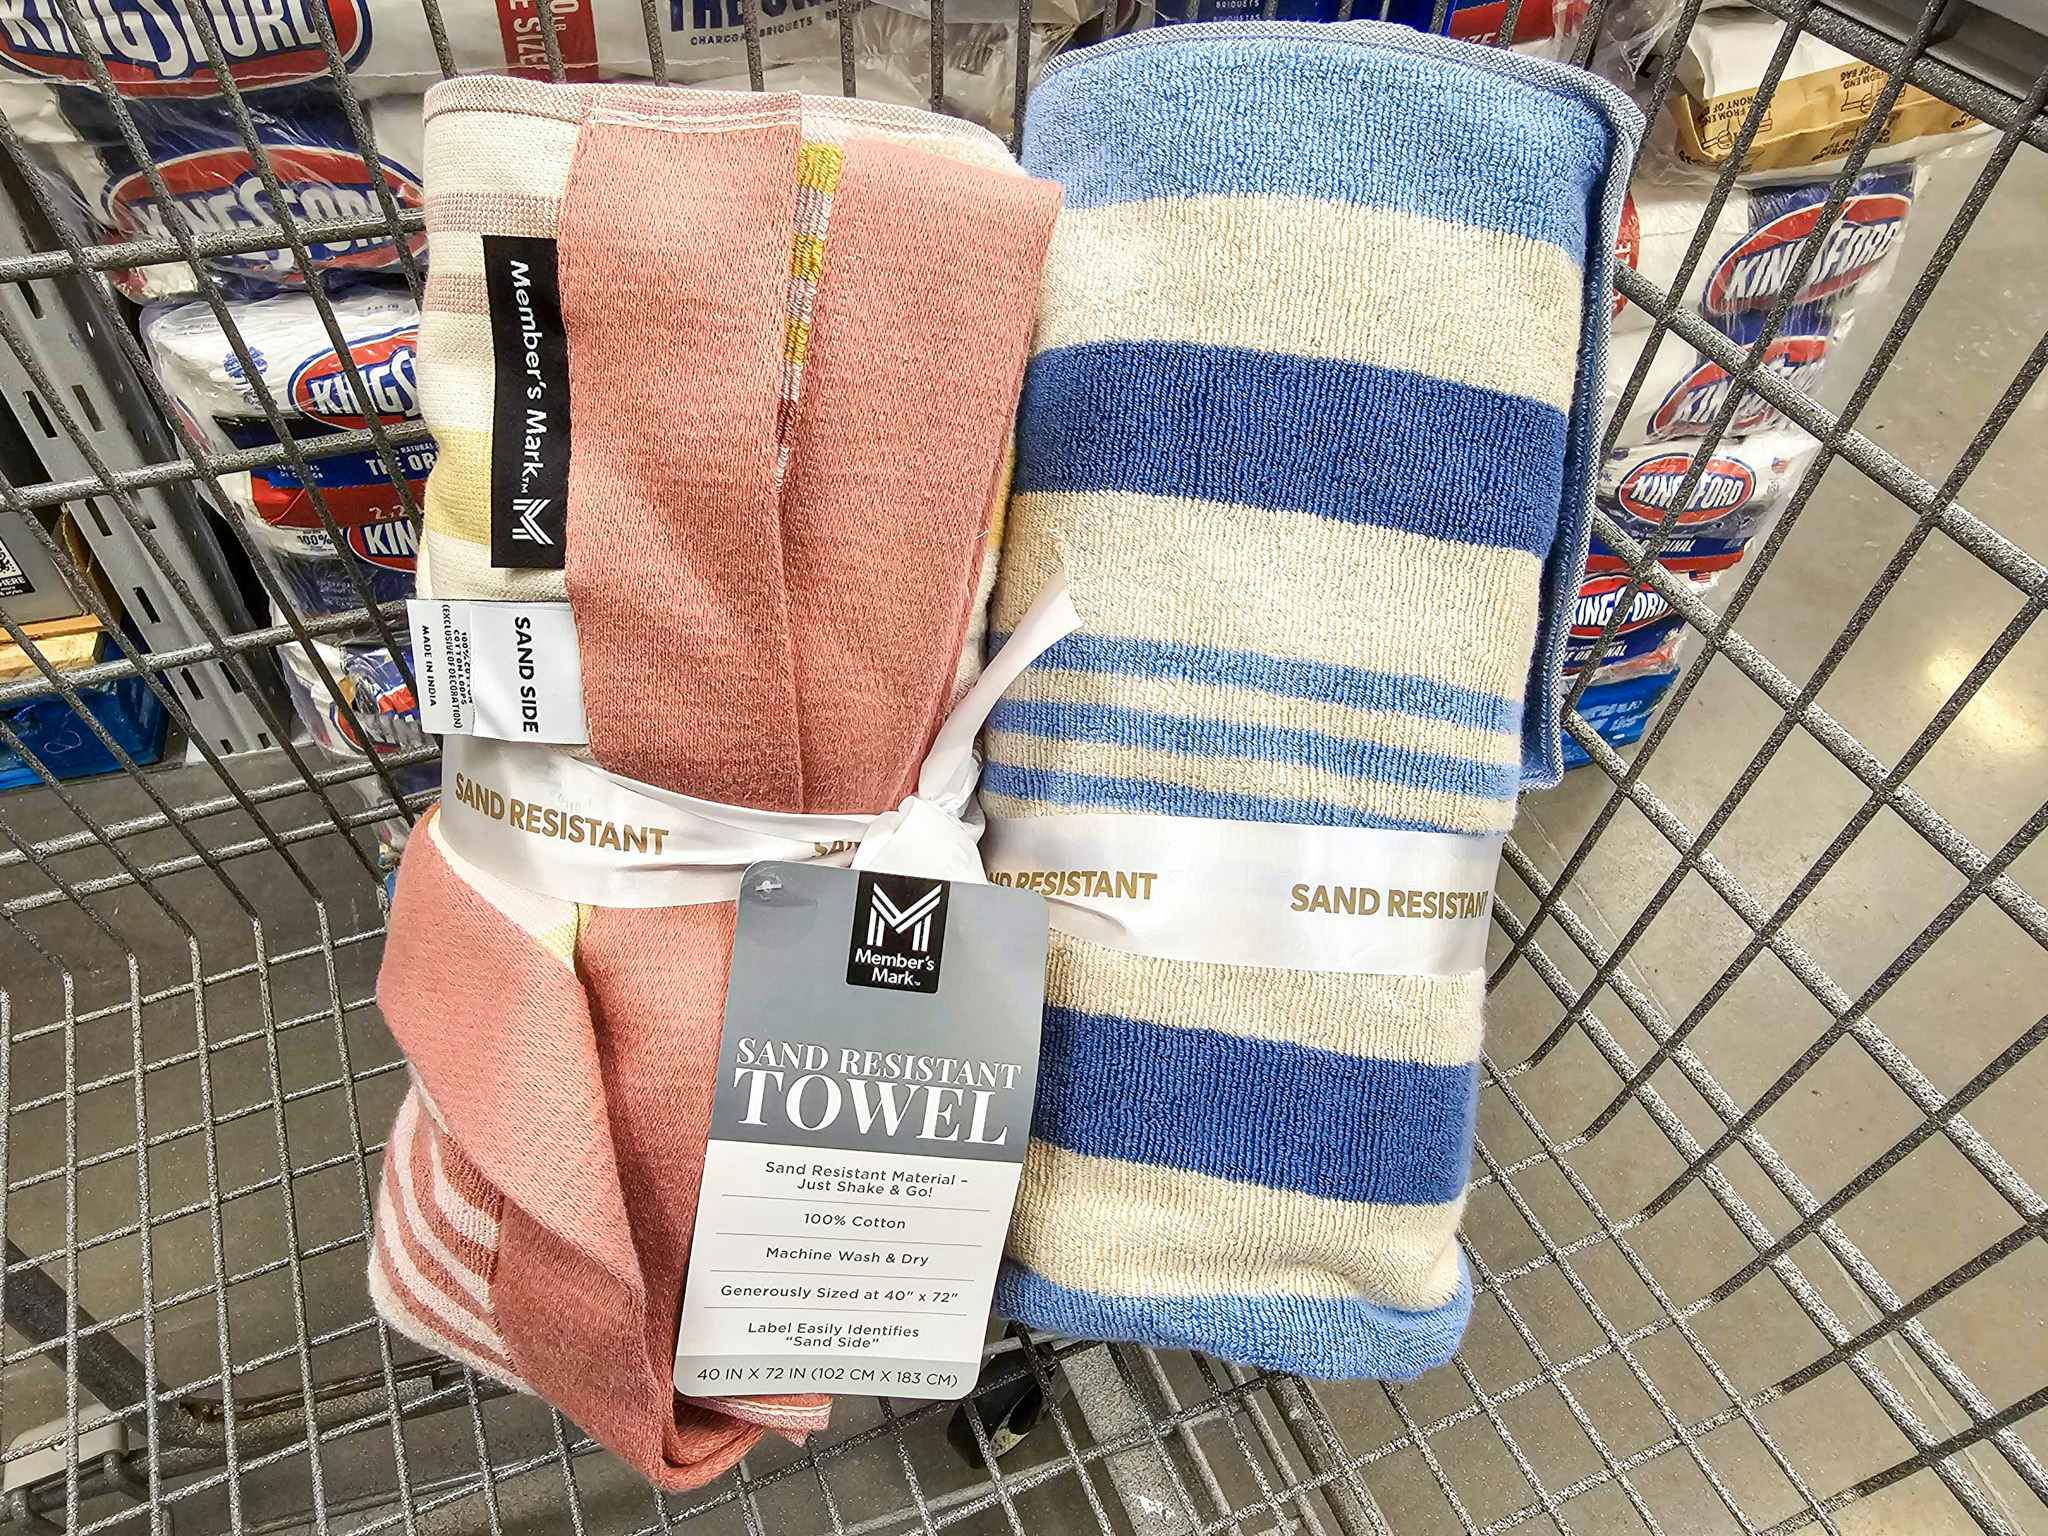 2 beach towels in a shopping cart